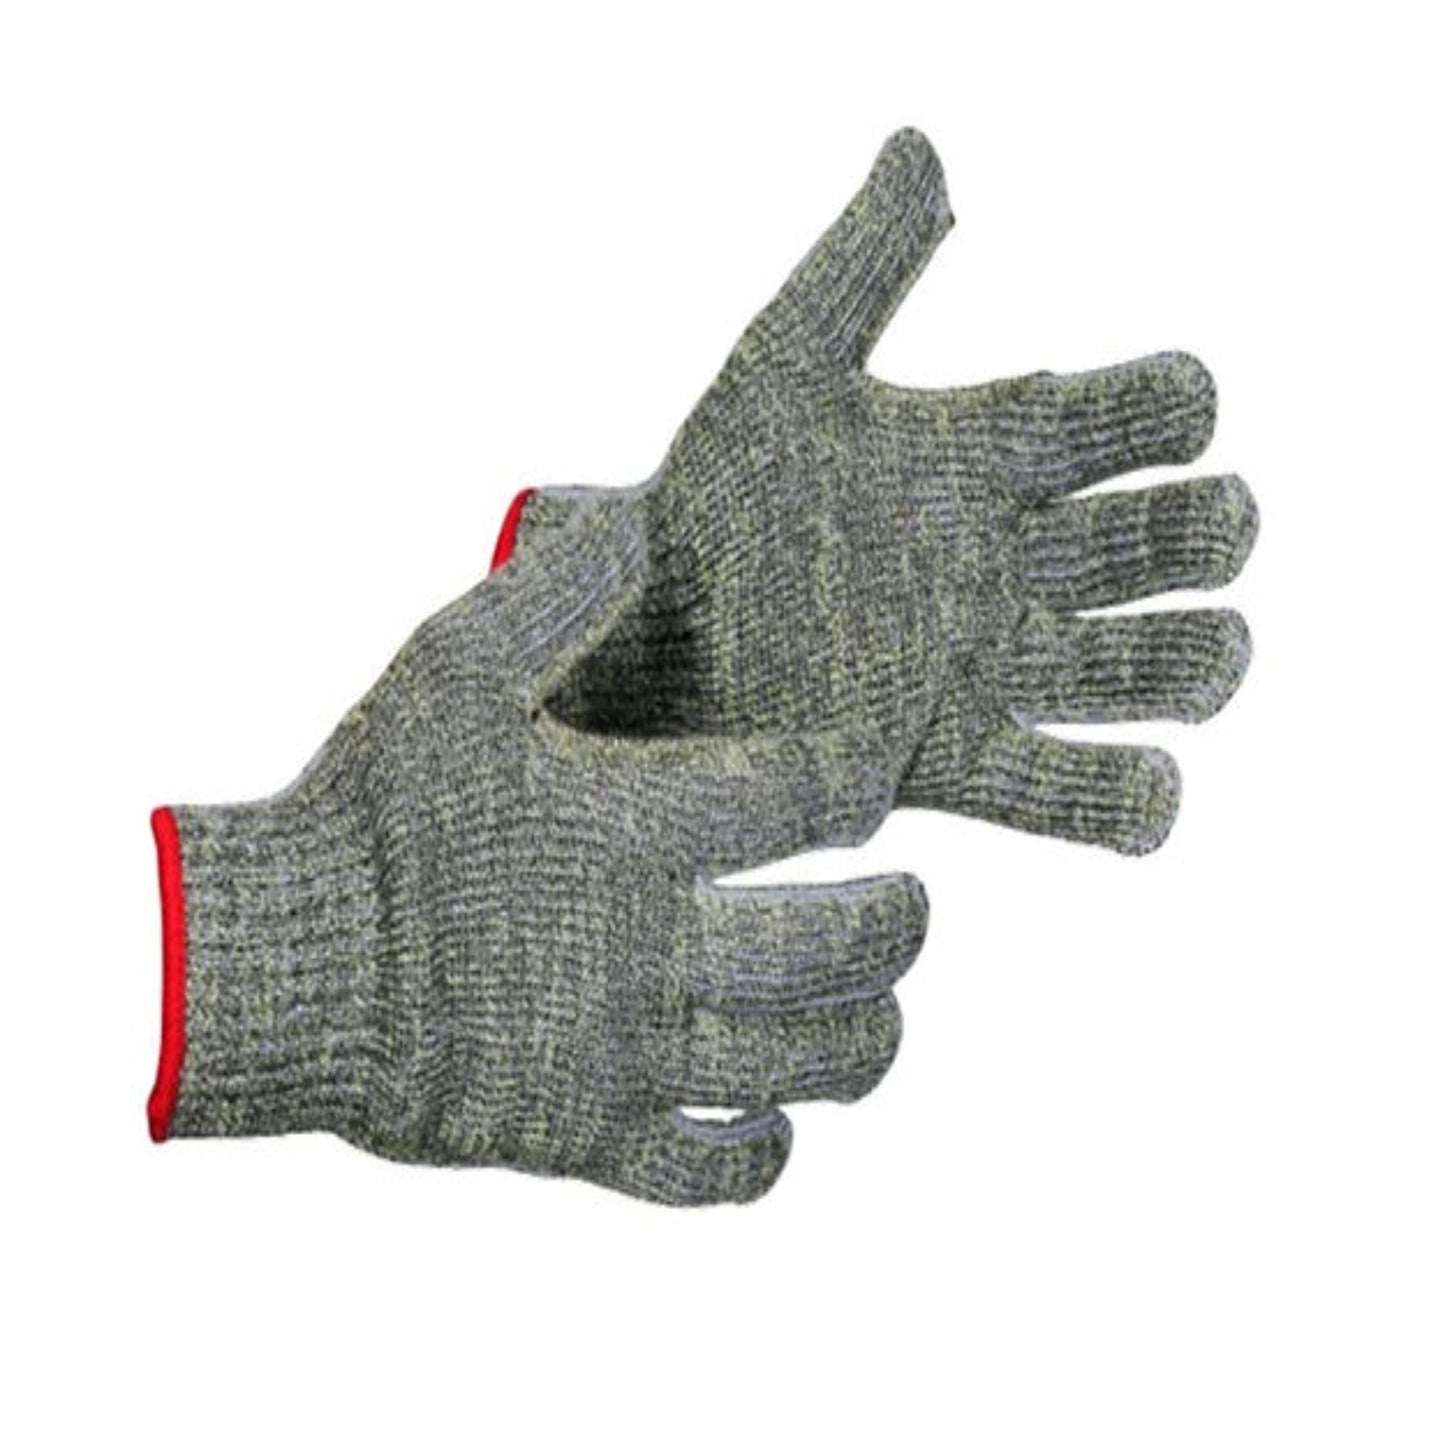 Cut A5 Aramid-Stainless Steel 7 Gauge Knit Glove